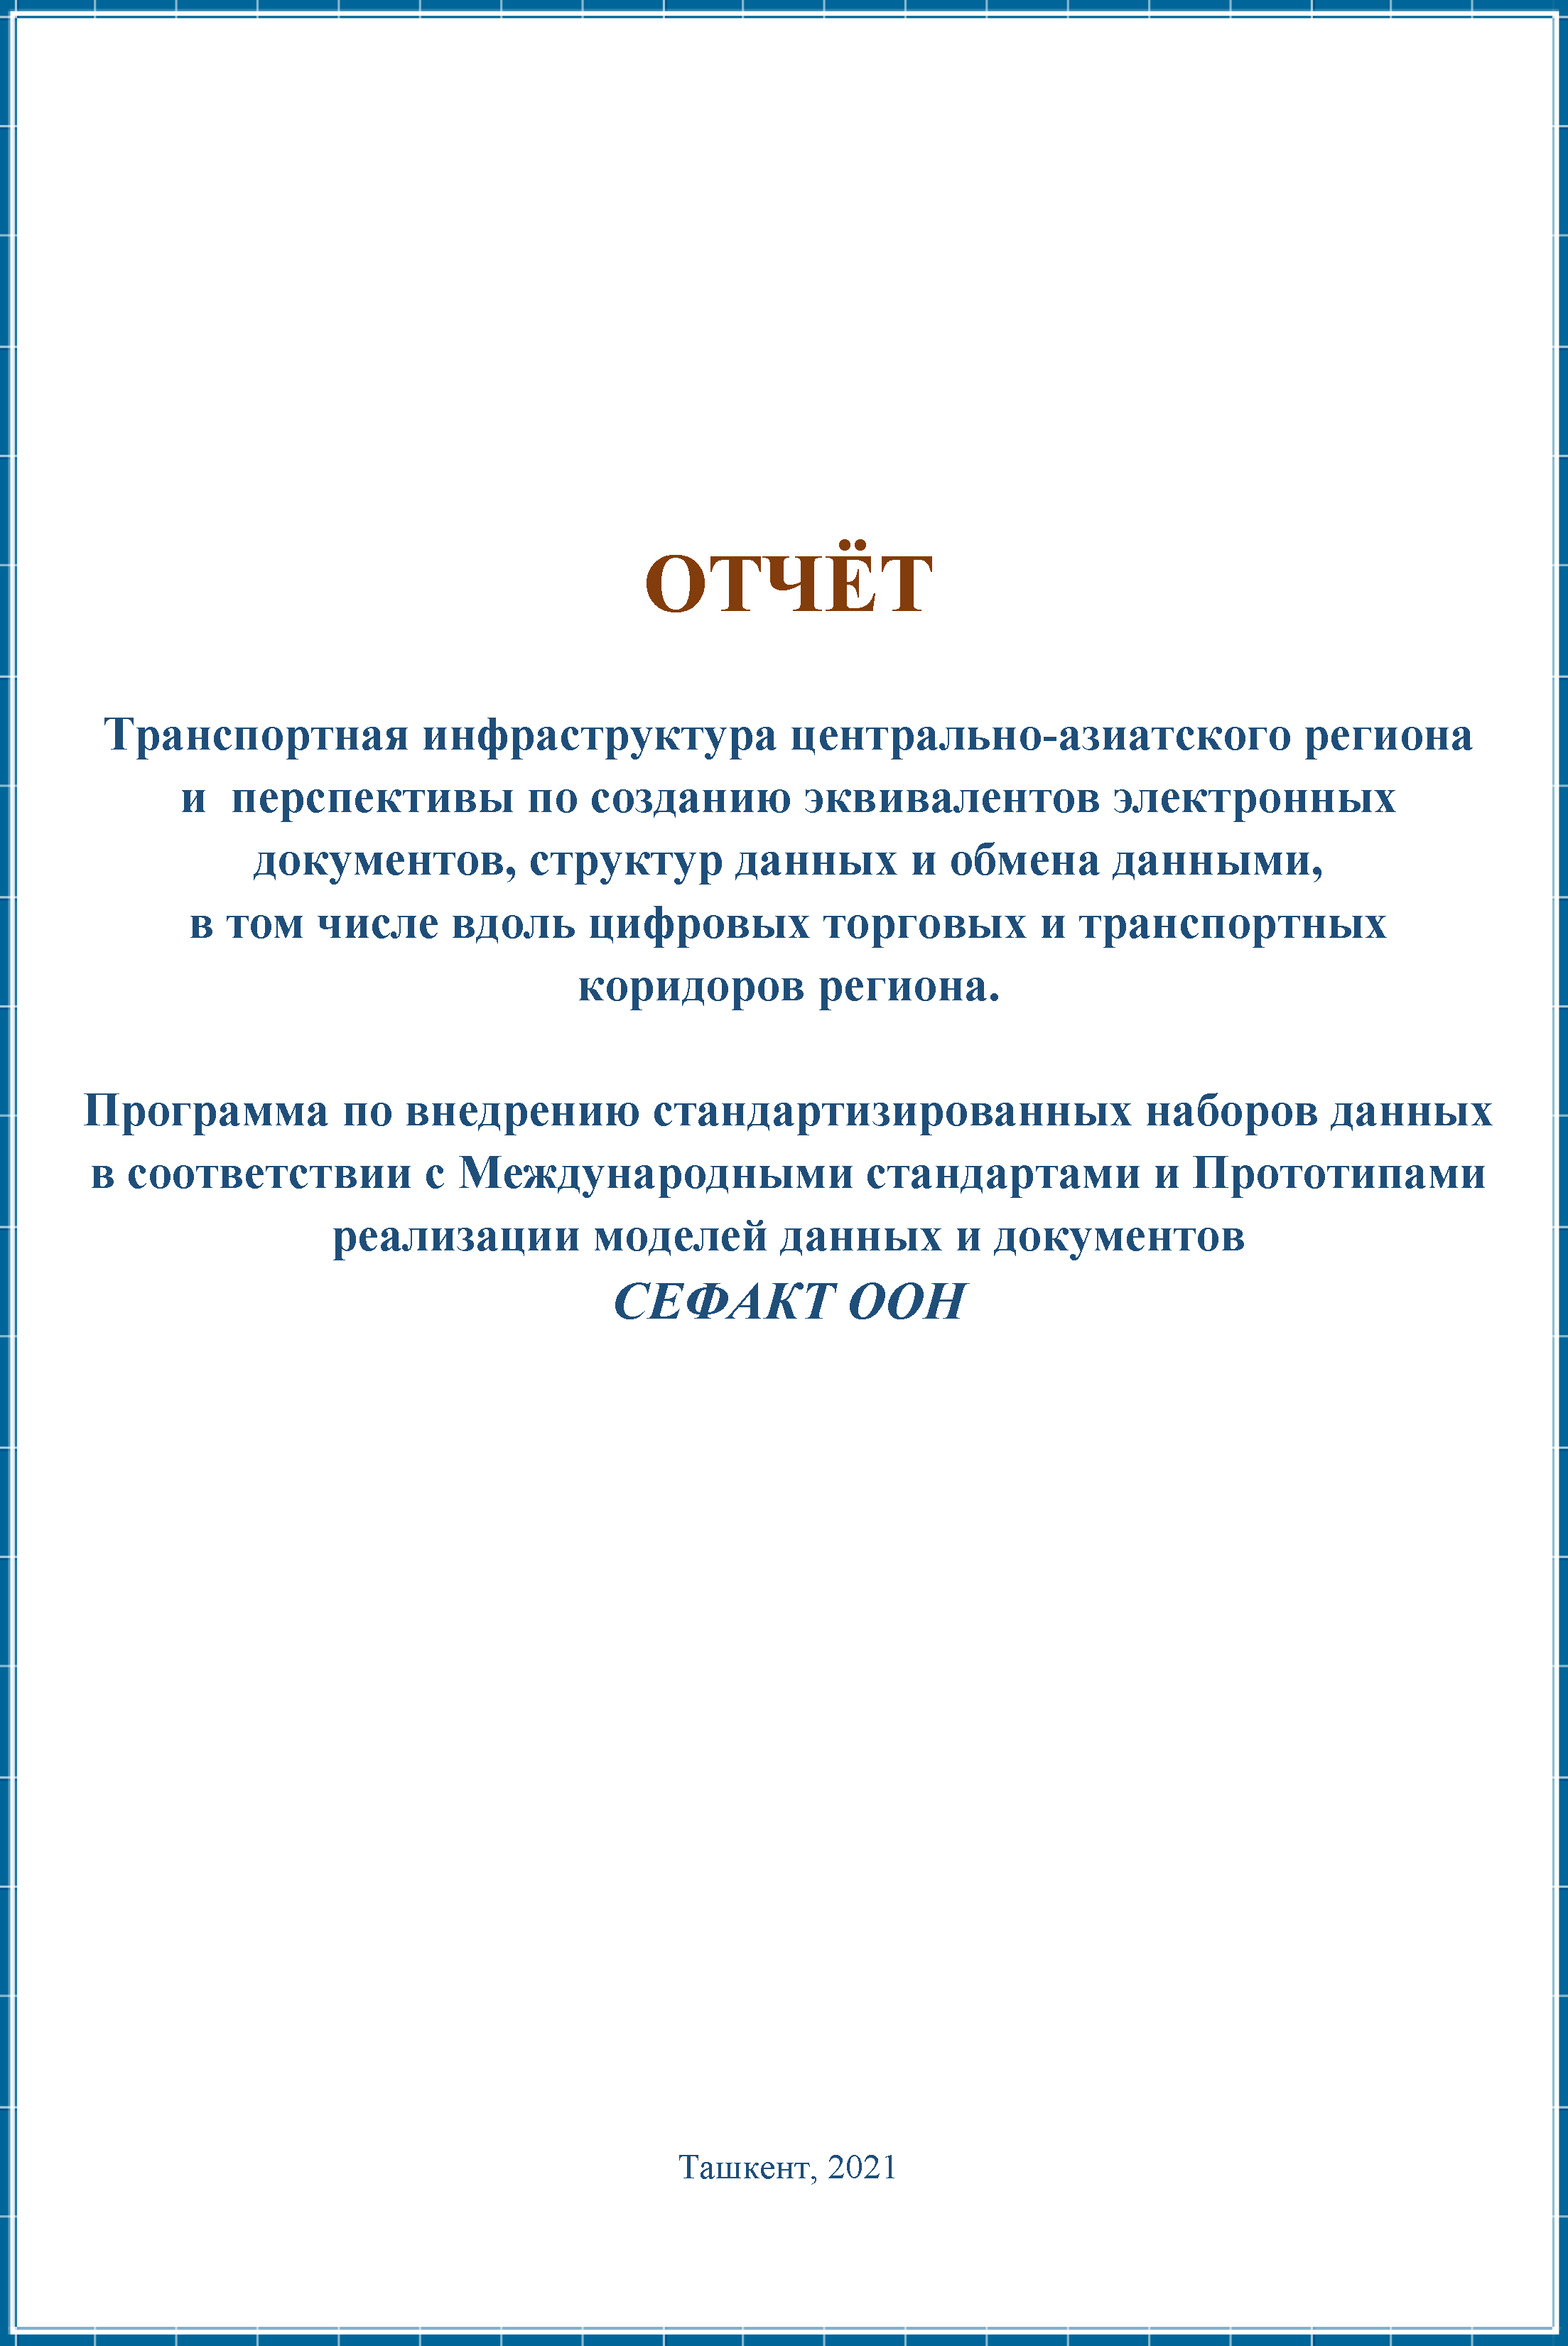 Report_Central Asia_CEFACT UN_2021